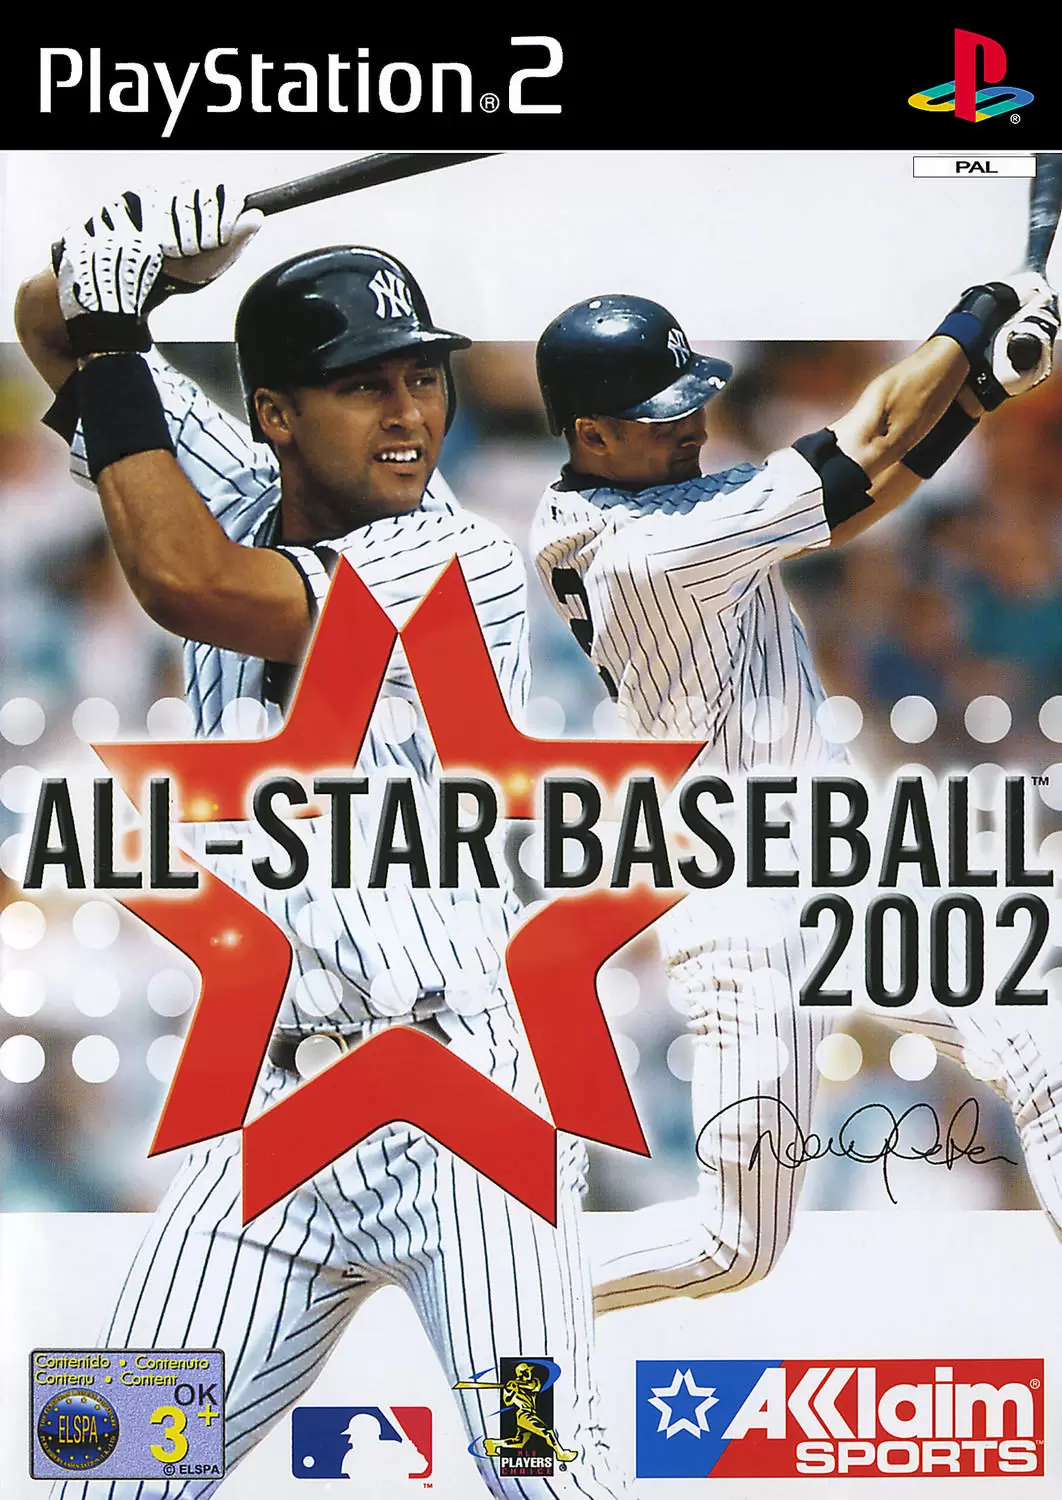 PS2 Games - All-Star Baseball 2002